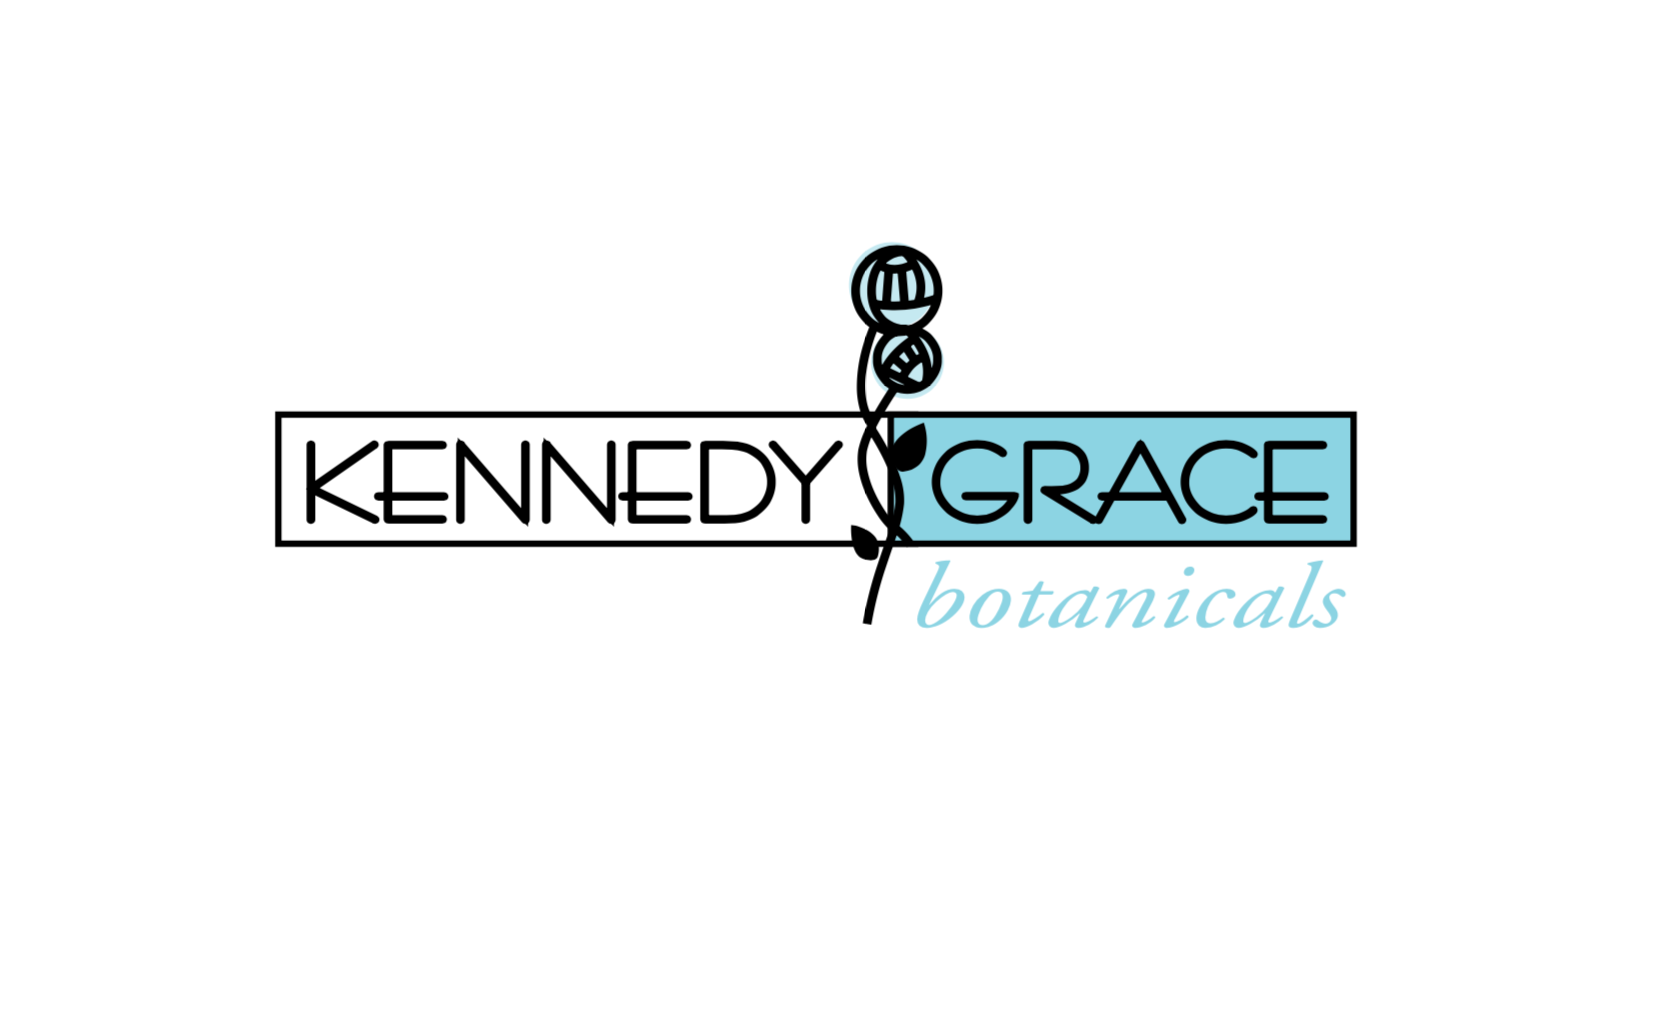 Kennedy Grace Botanicals logo design